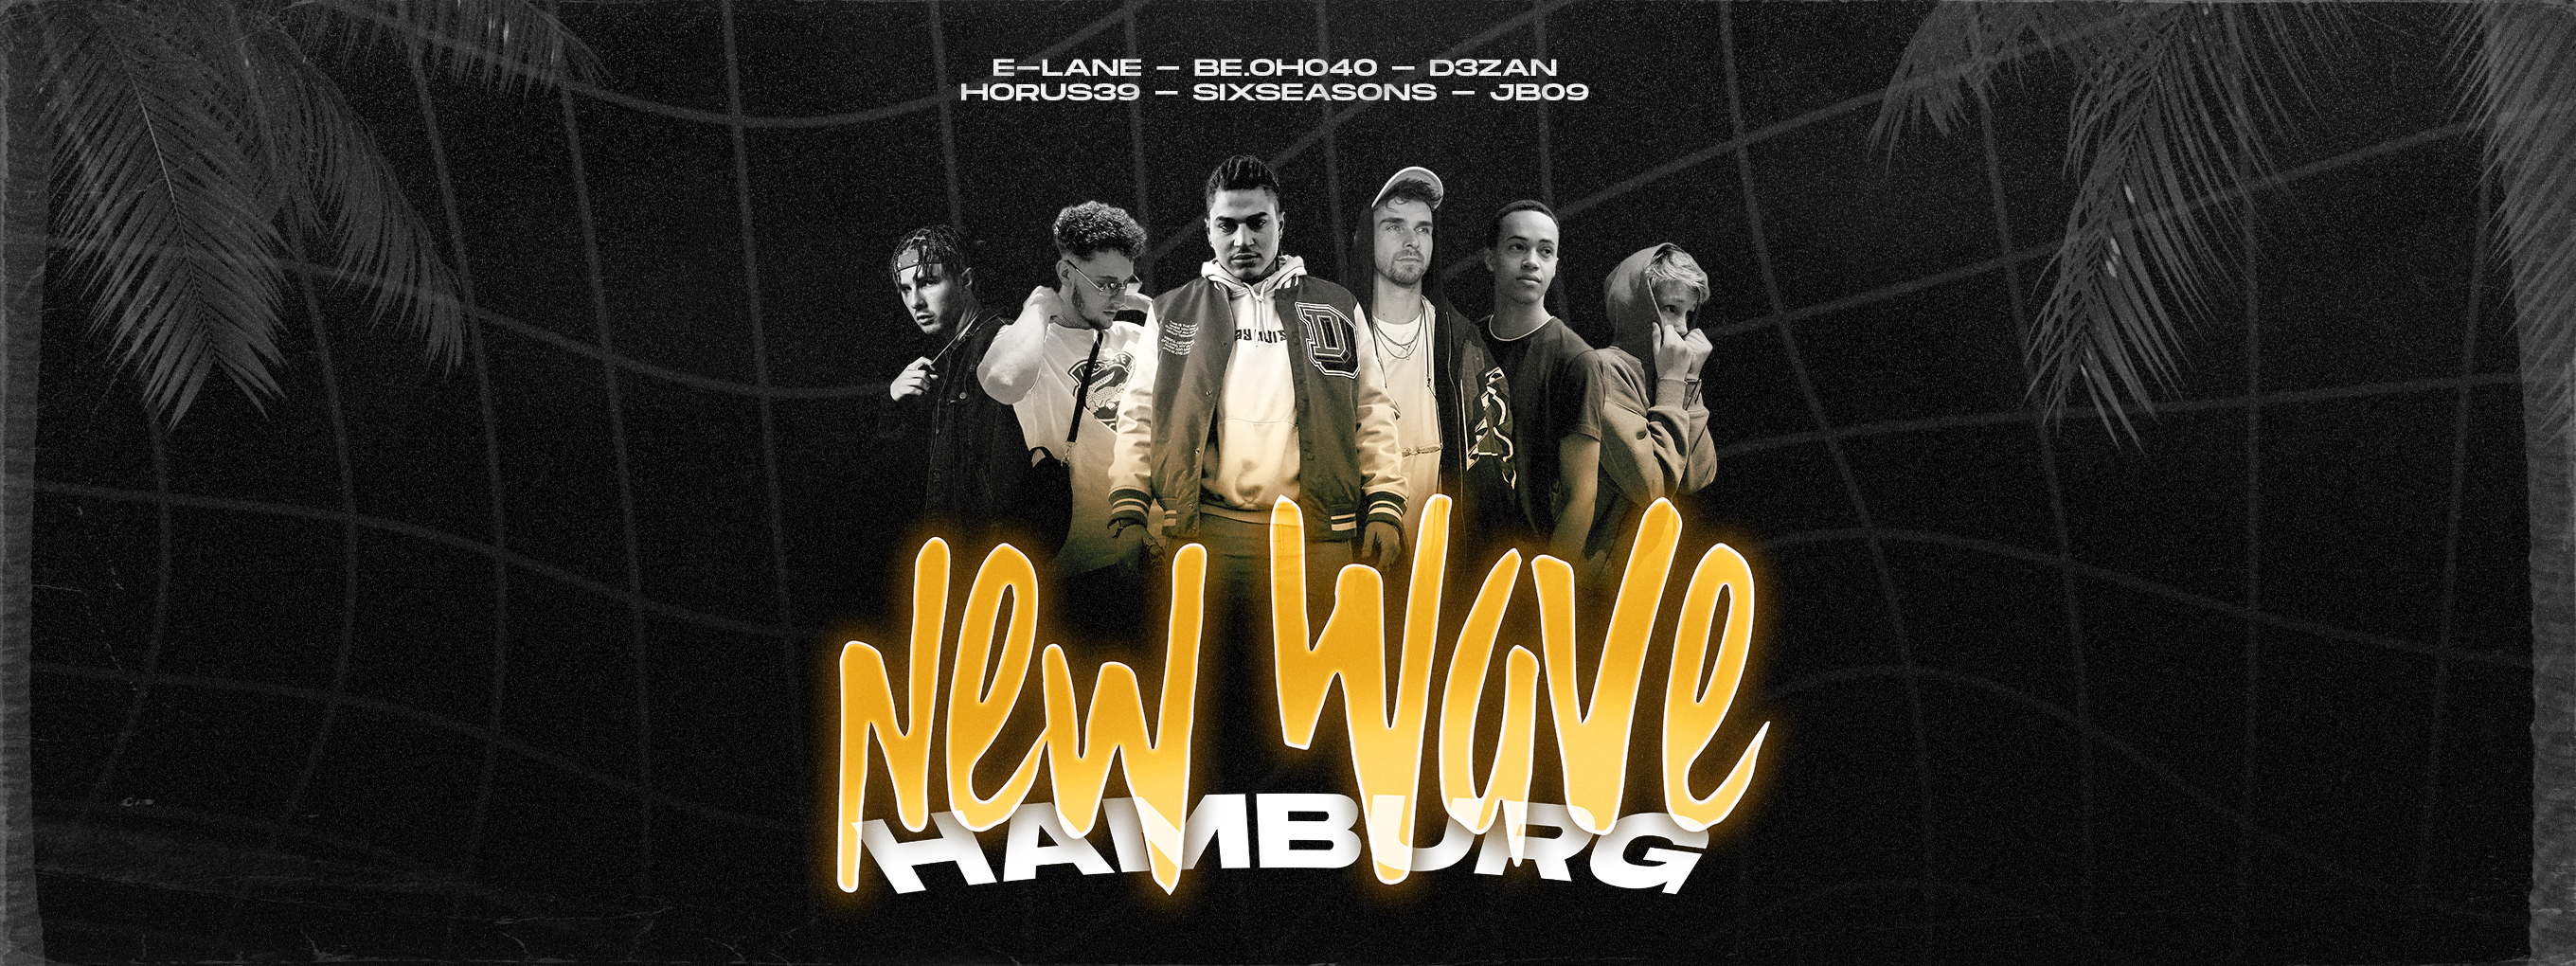 2023 new wave hamburg ticket header1 New Wave Hamburg